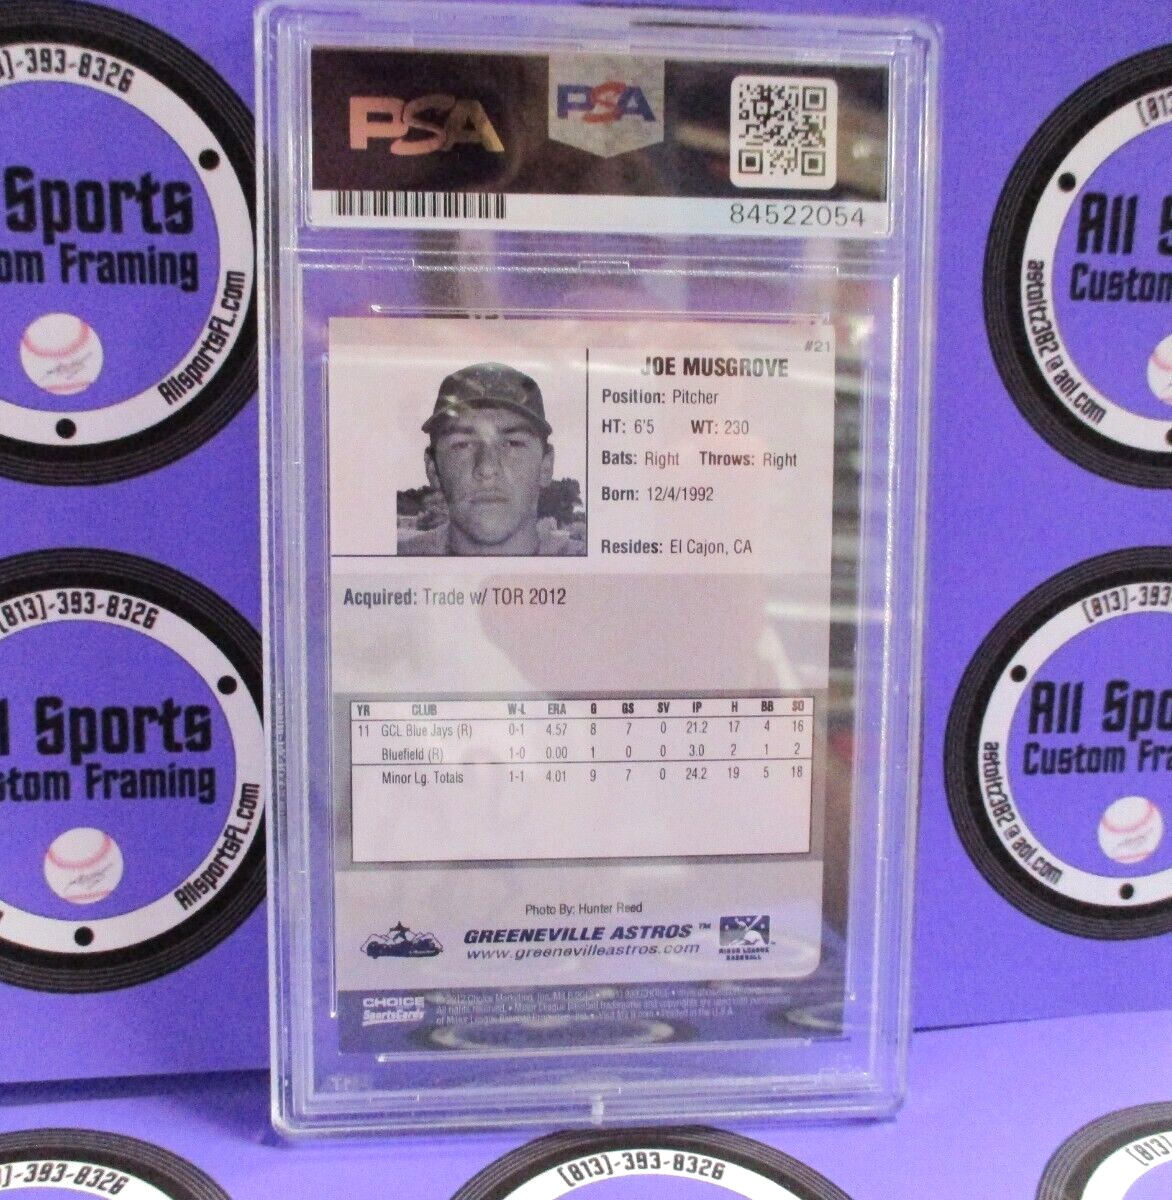 Joe Musgrove Greenville Astros Choice Card PSA Slabbed Certified 84522054